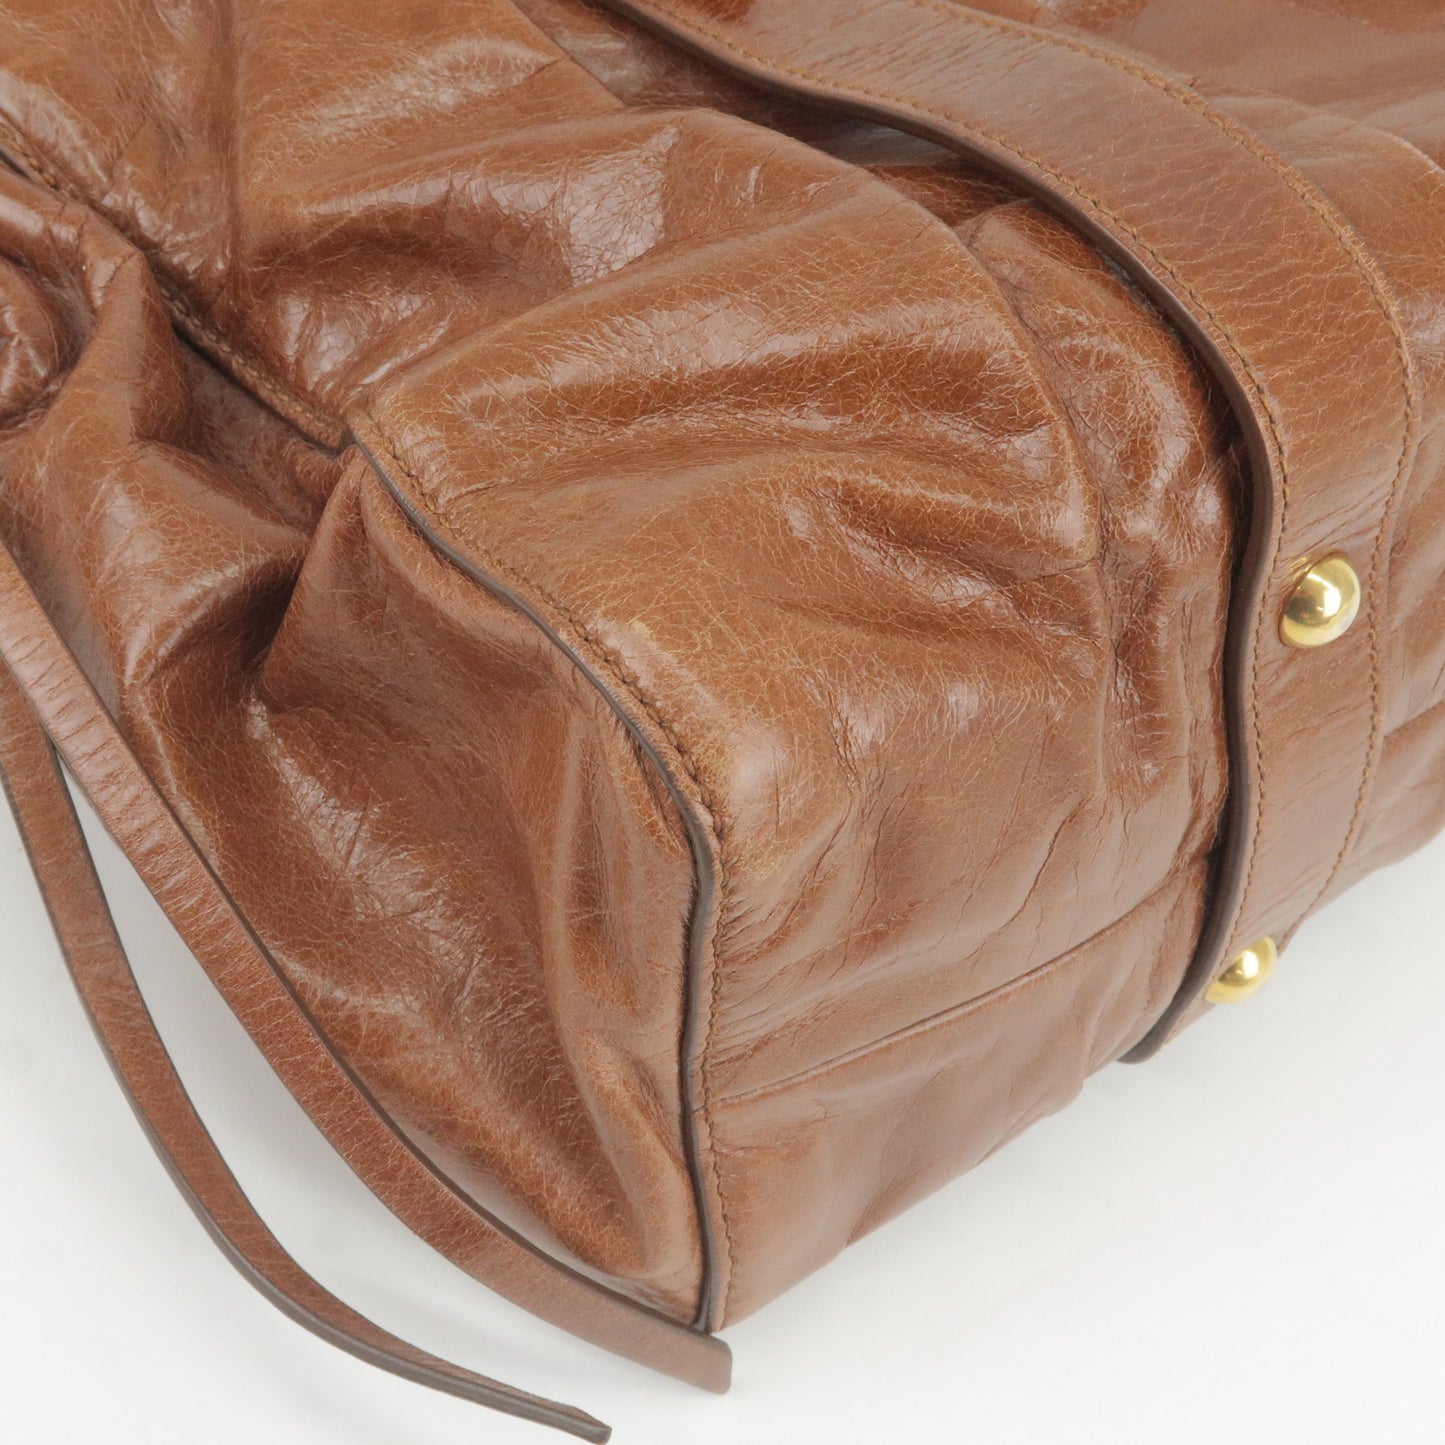 MIU MIU Leather 2Way Shoulder Bag Hand Bag Brown RT0383